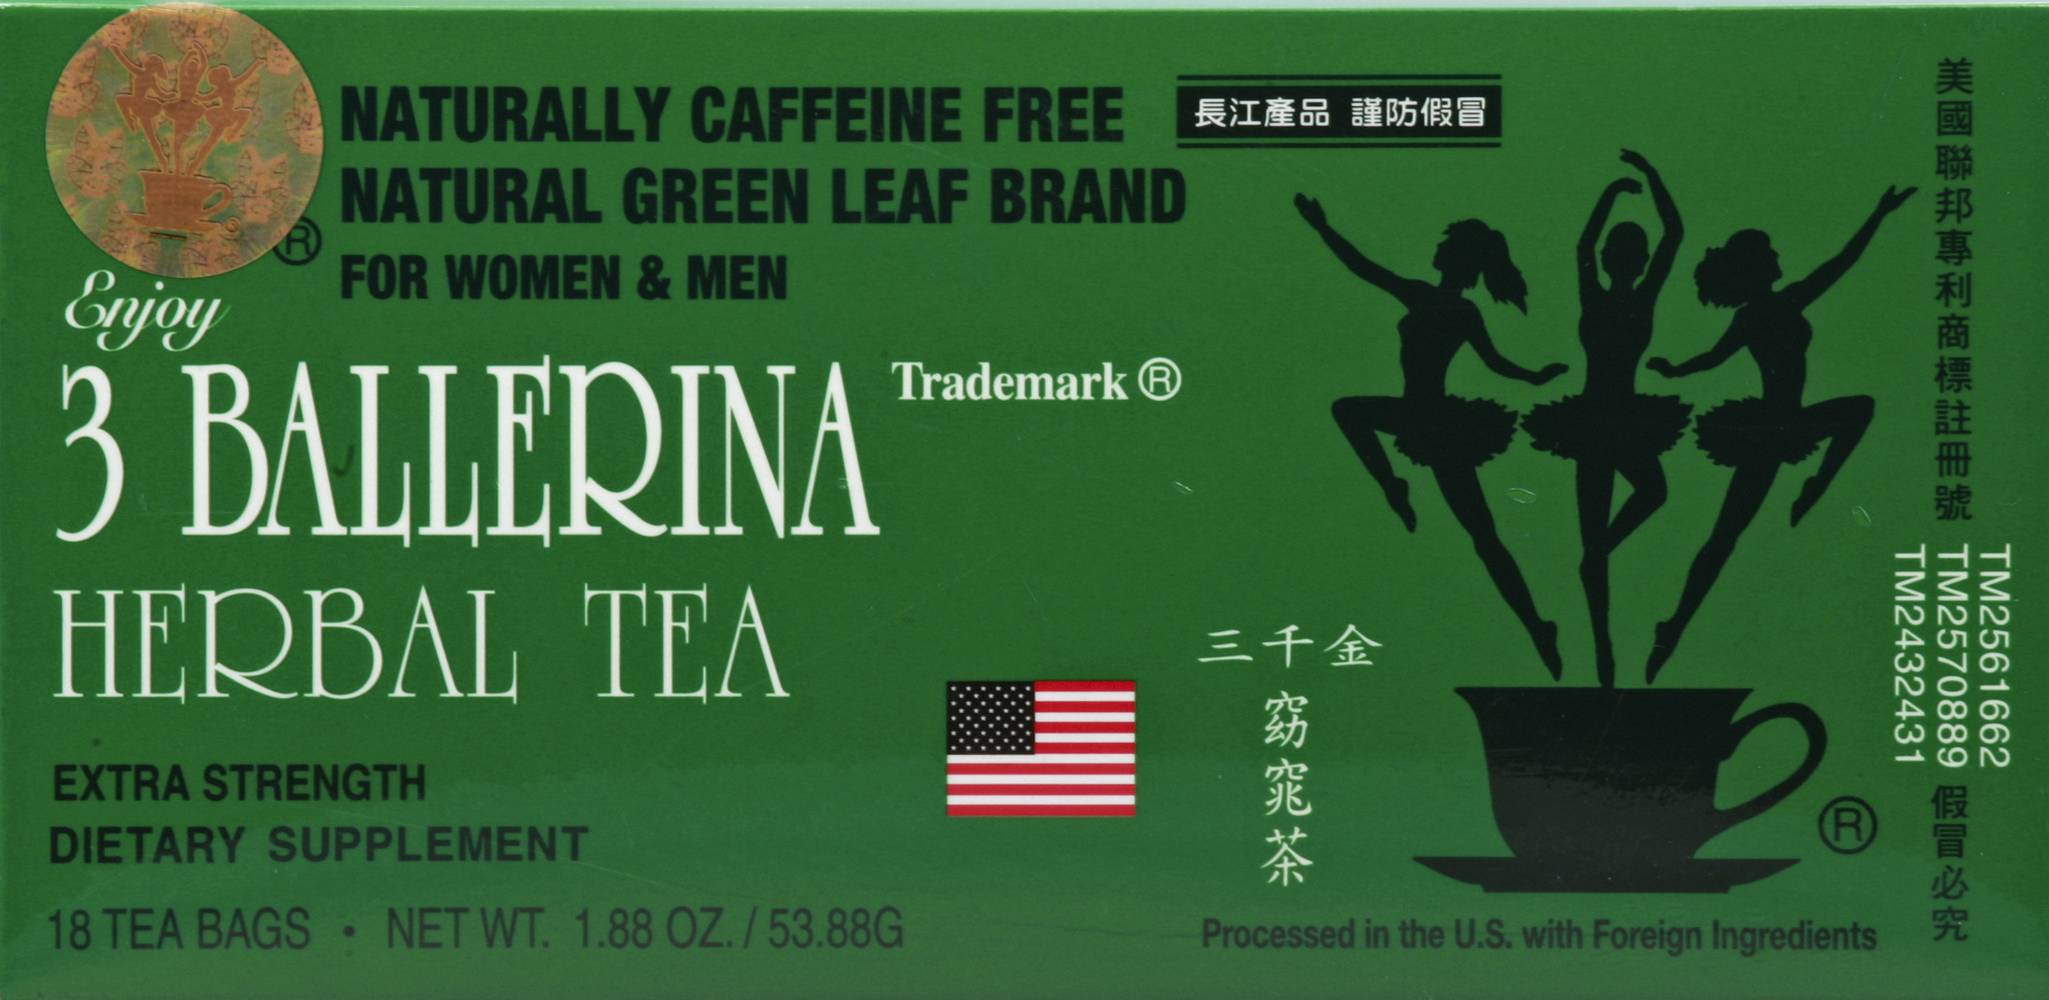 3 Ballerina Natural Green Leaf Brand Herbal Tea (18 ct, 1.88 oz)